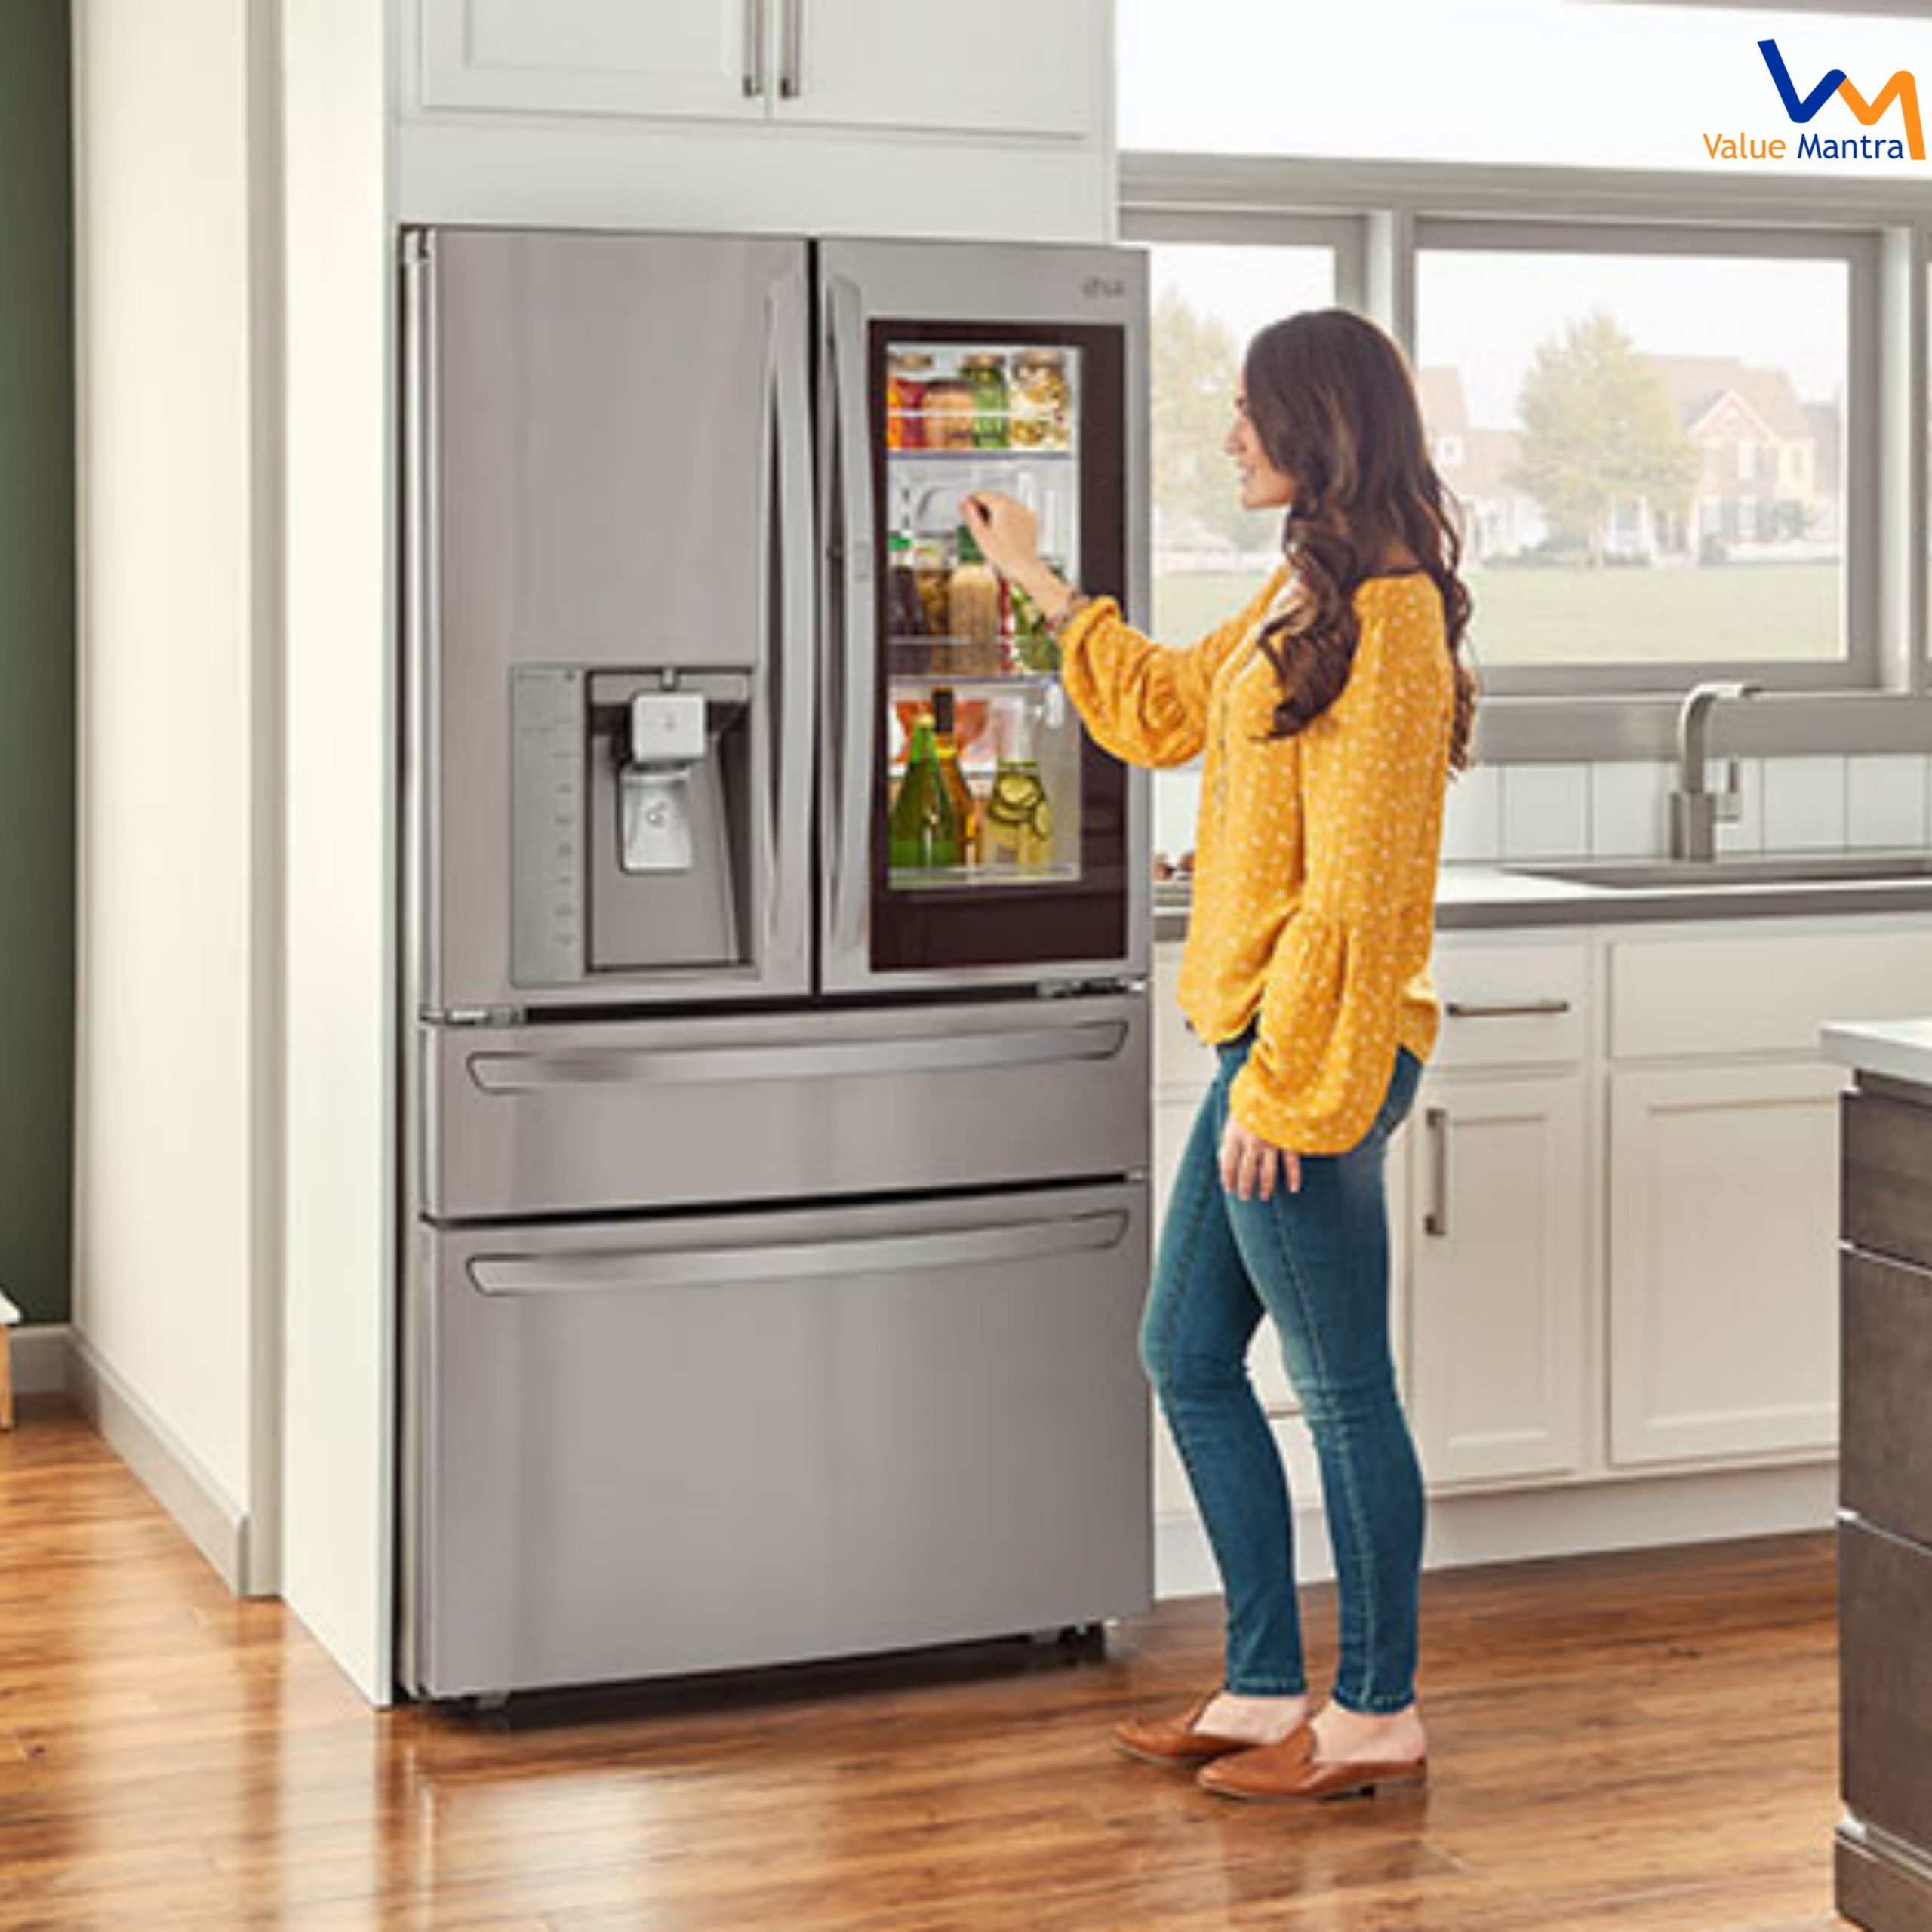 Top 3 Smart Refrigerators For Indian Kitchens